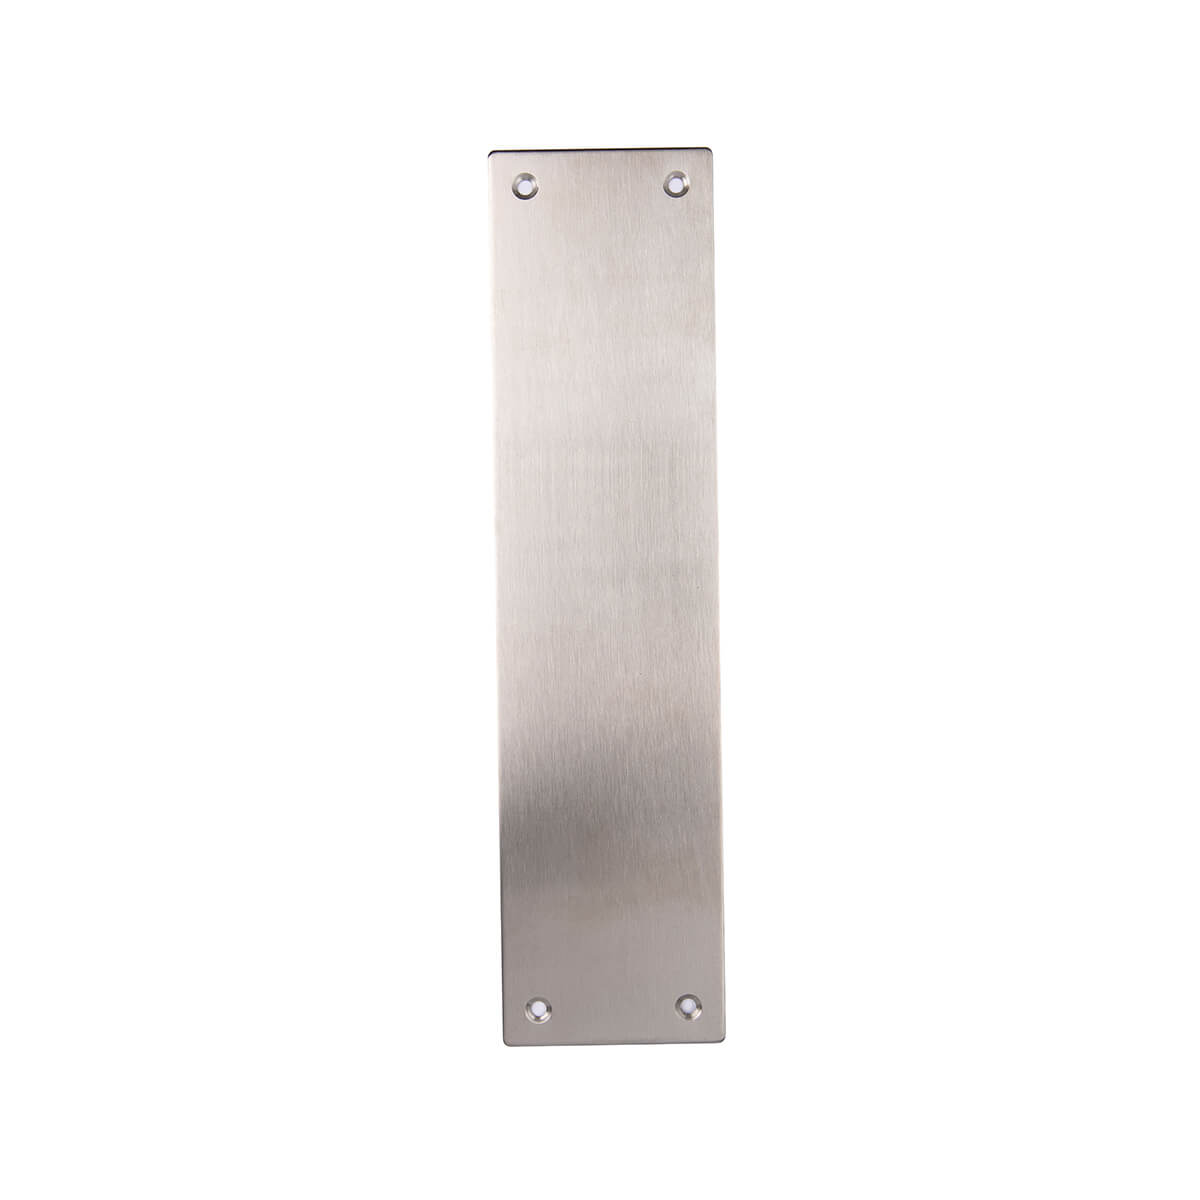 300 x 65 x 1.5mm Push Plate Satin Stainless Steel door hardware